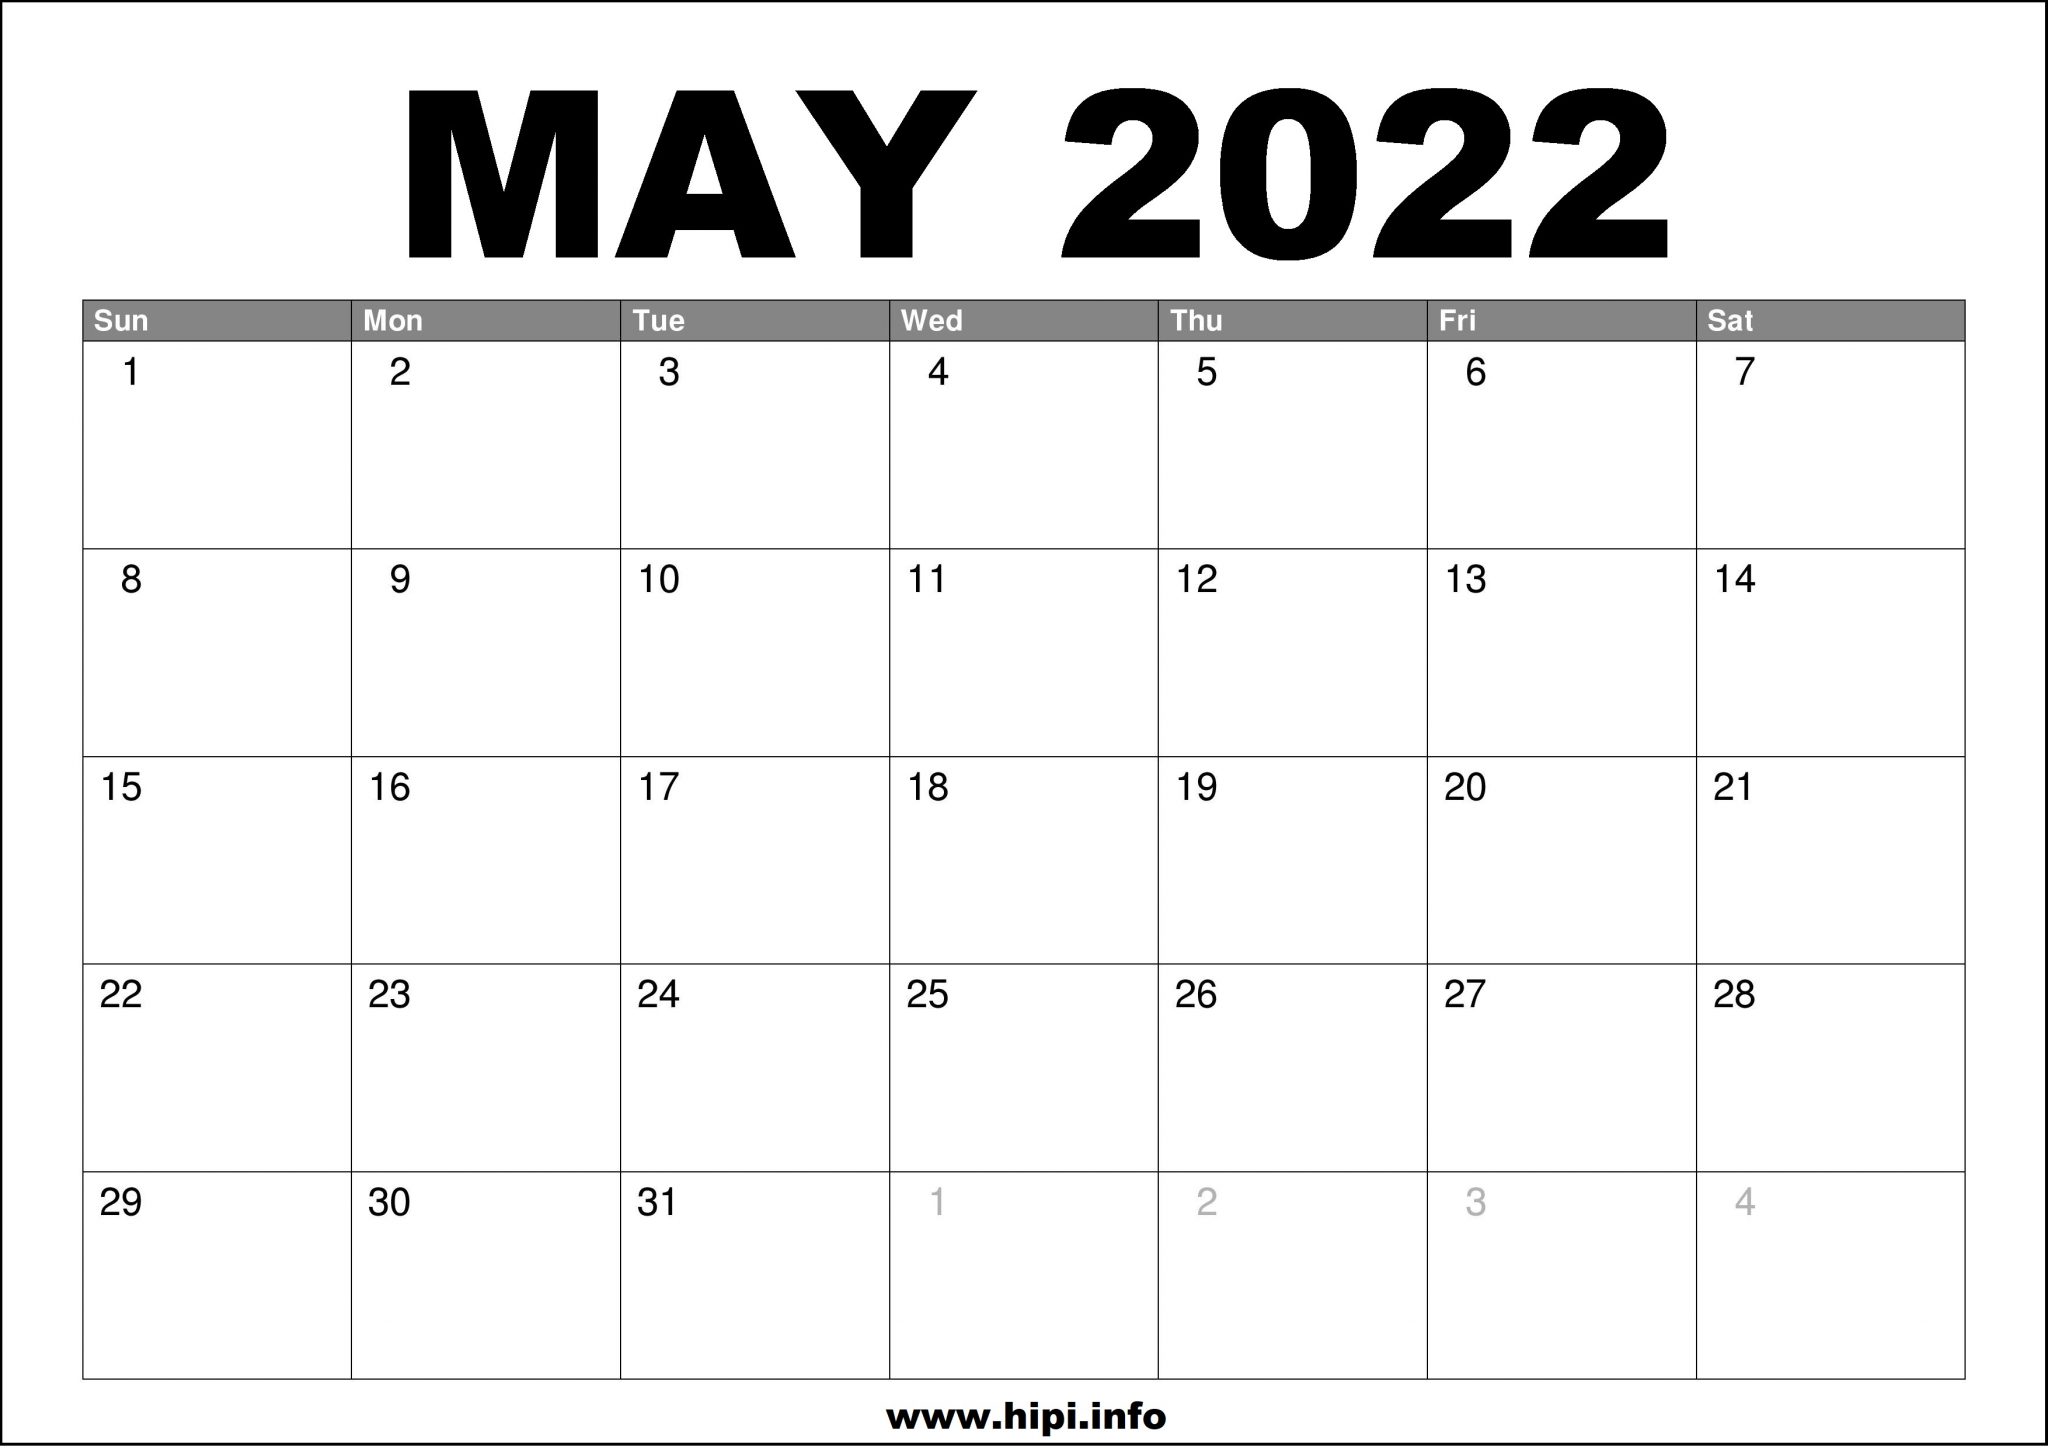 may 2022 calendar printable free hipiinfo calendars printable free